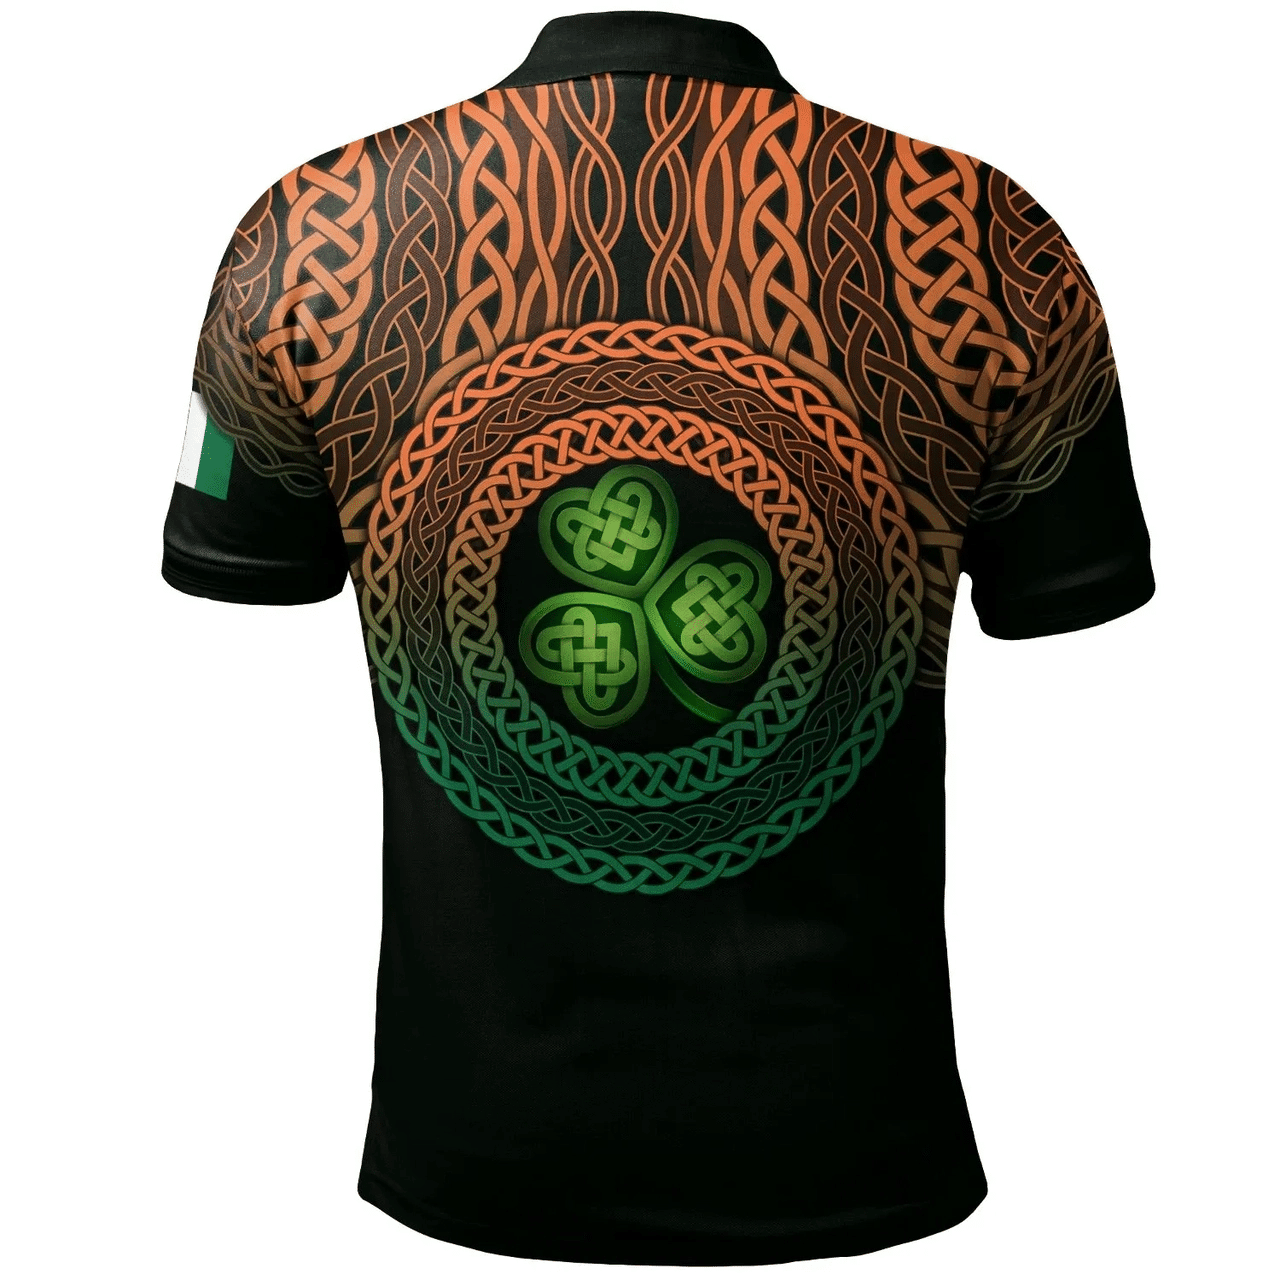 1stIreland Ireland Polo Shirt - Newcomen or Newcombe Irish Family Crest Polo Shirt - Celtic Pride A7 | 1stIreland.com